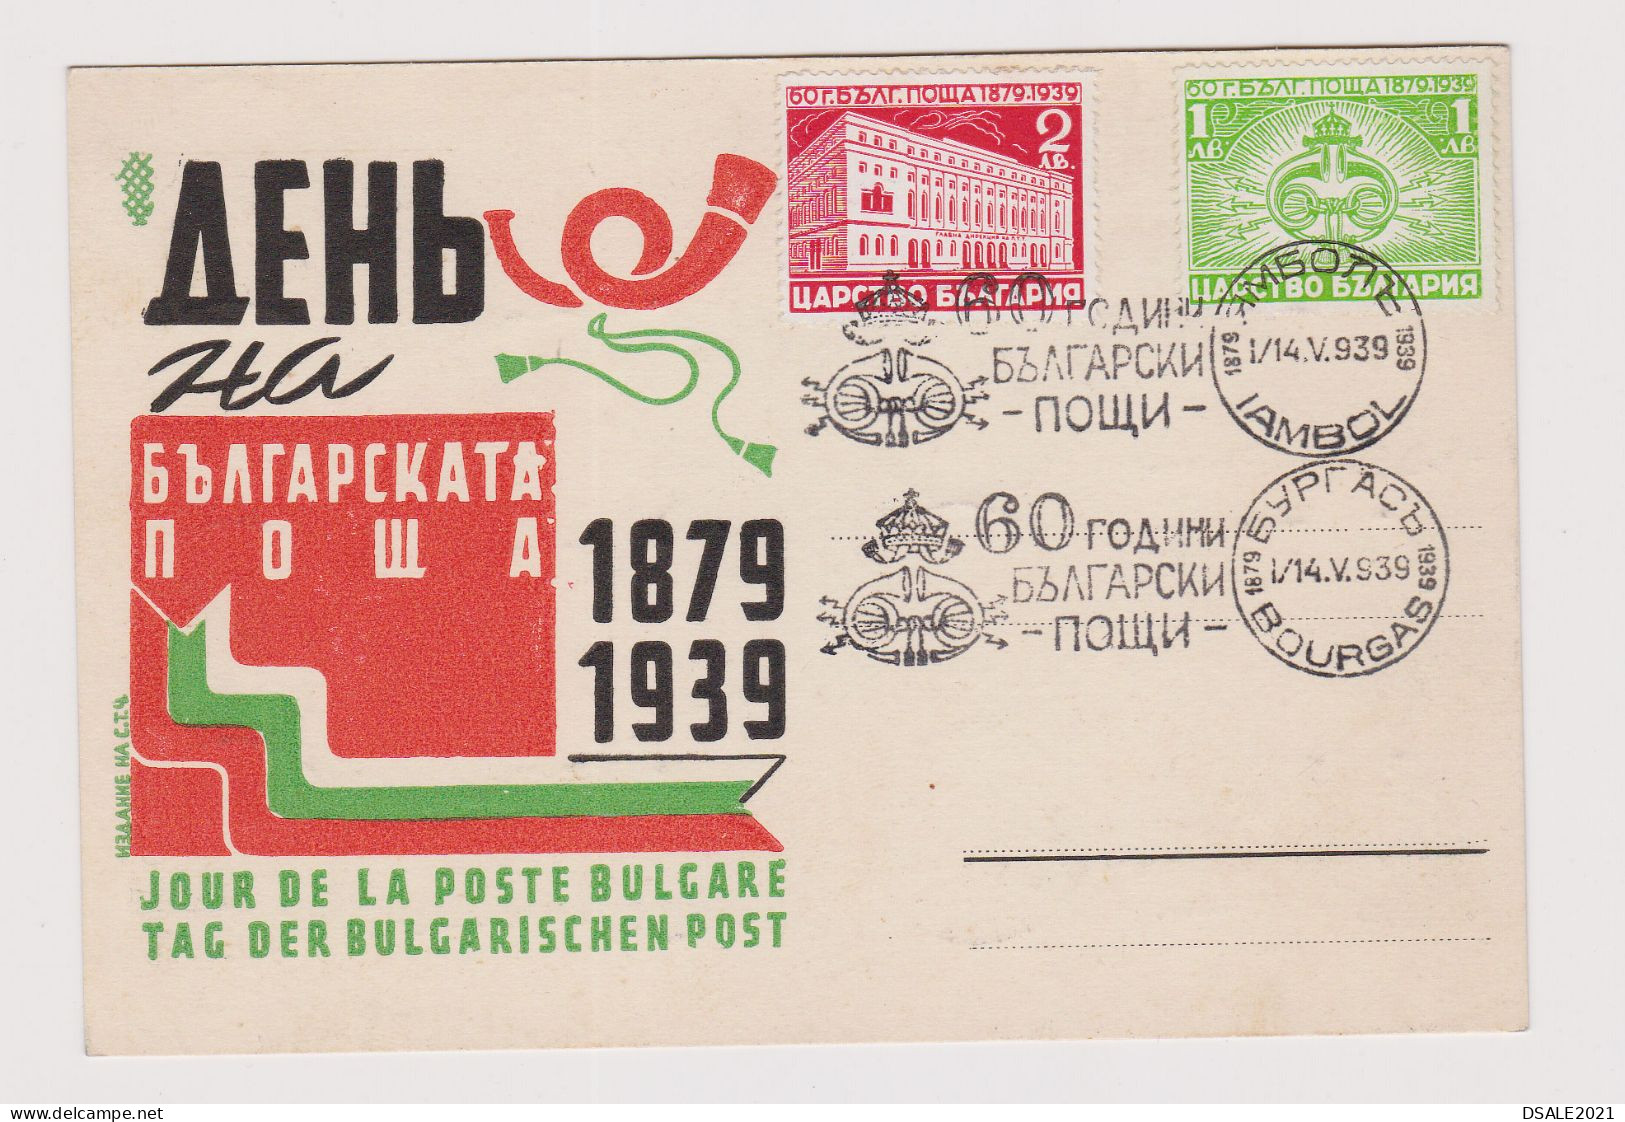 Bulgaria, Bulgarian Posts Anniversary 1879-1939 Card FDC, JOUR DE LA POSTE BULGARE, TAG DER BULGARISCHEN POST (66670) - FDC